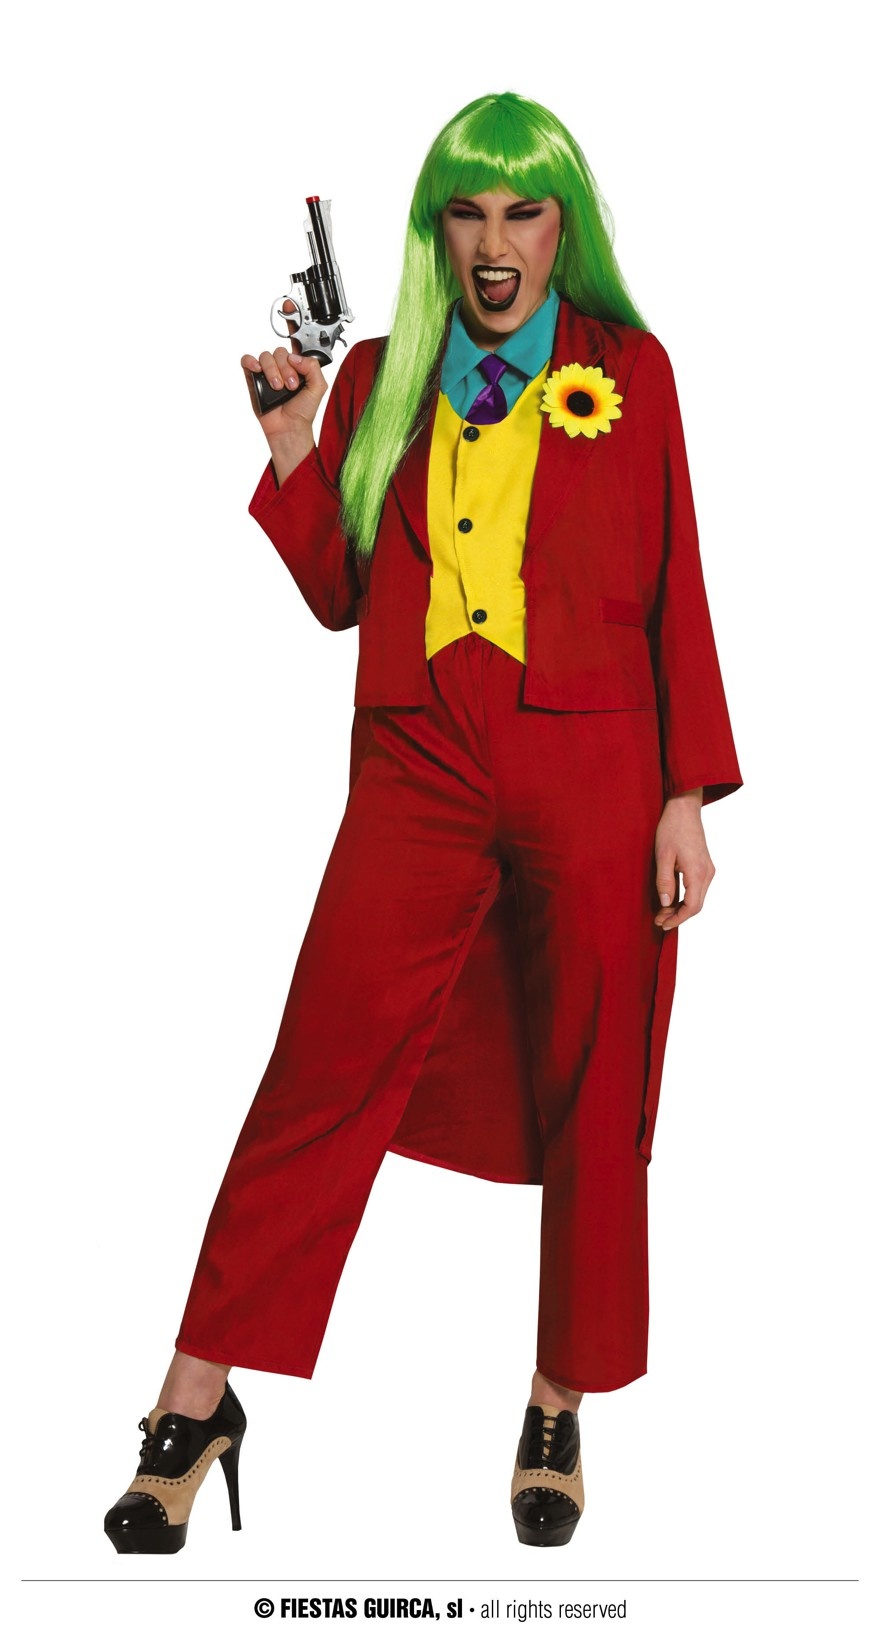 The Joker Kostuum Dames Rood